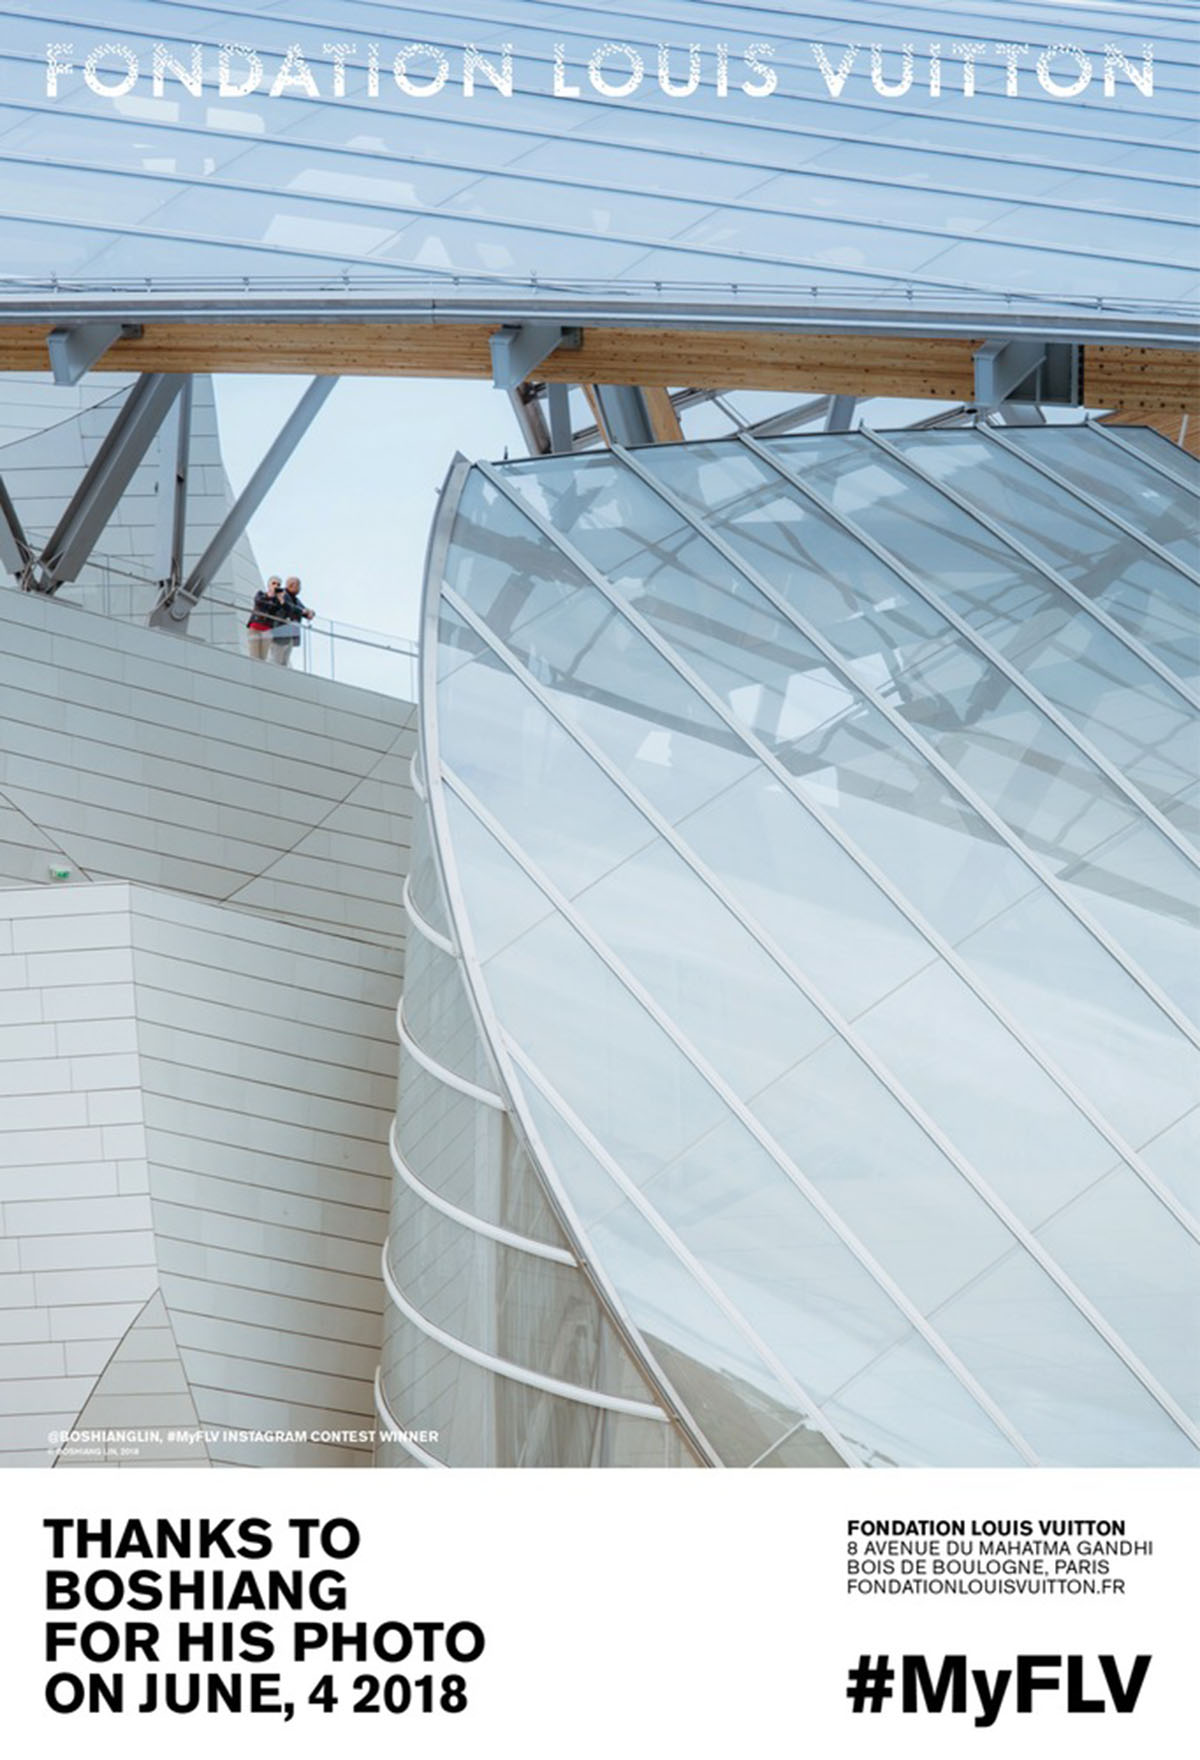 7 Best Photos of Frank Gehry's Fondation Louis Vuitton Building